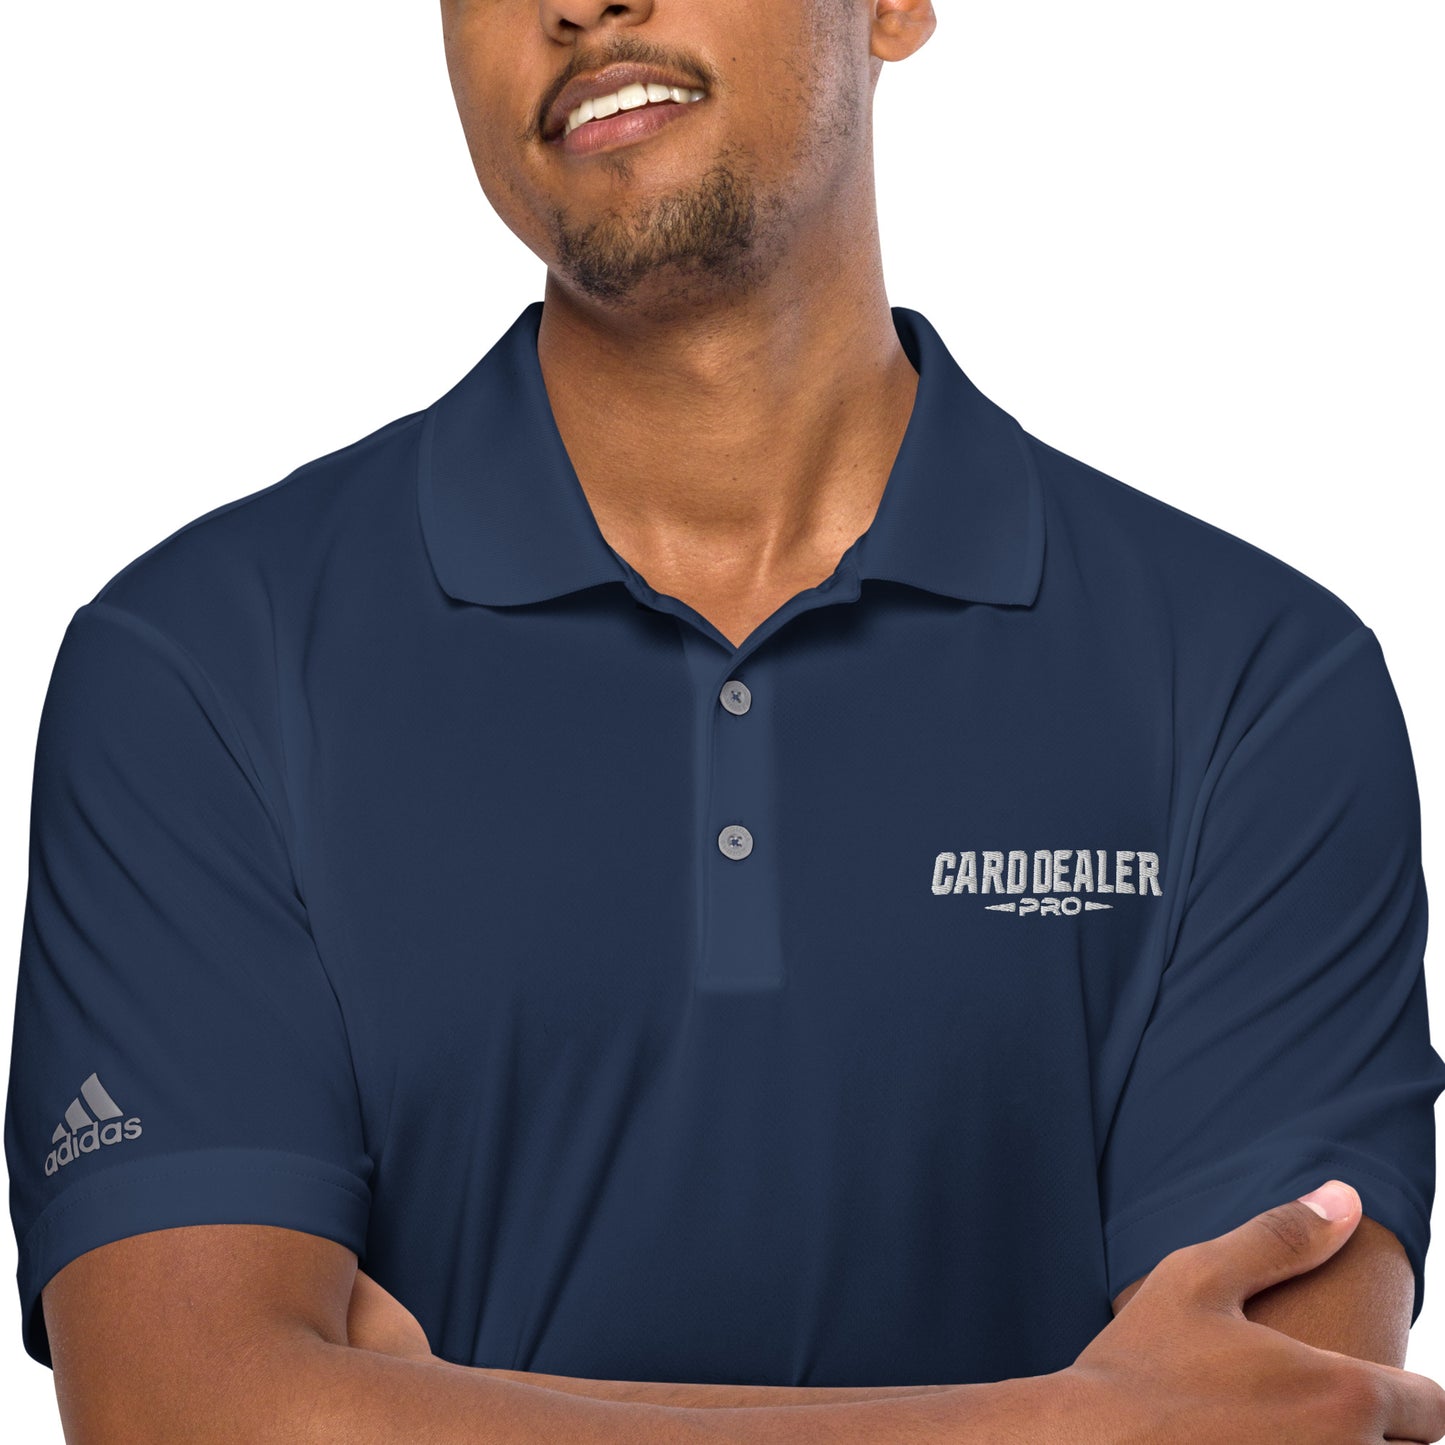 Card Dealer Pro - Adidas Performance Polo Shirt